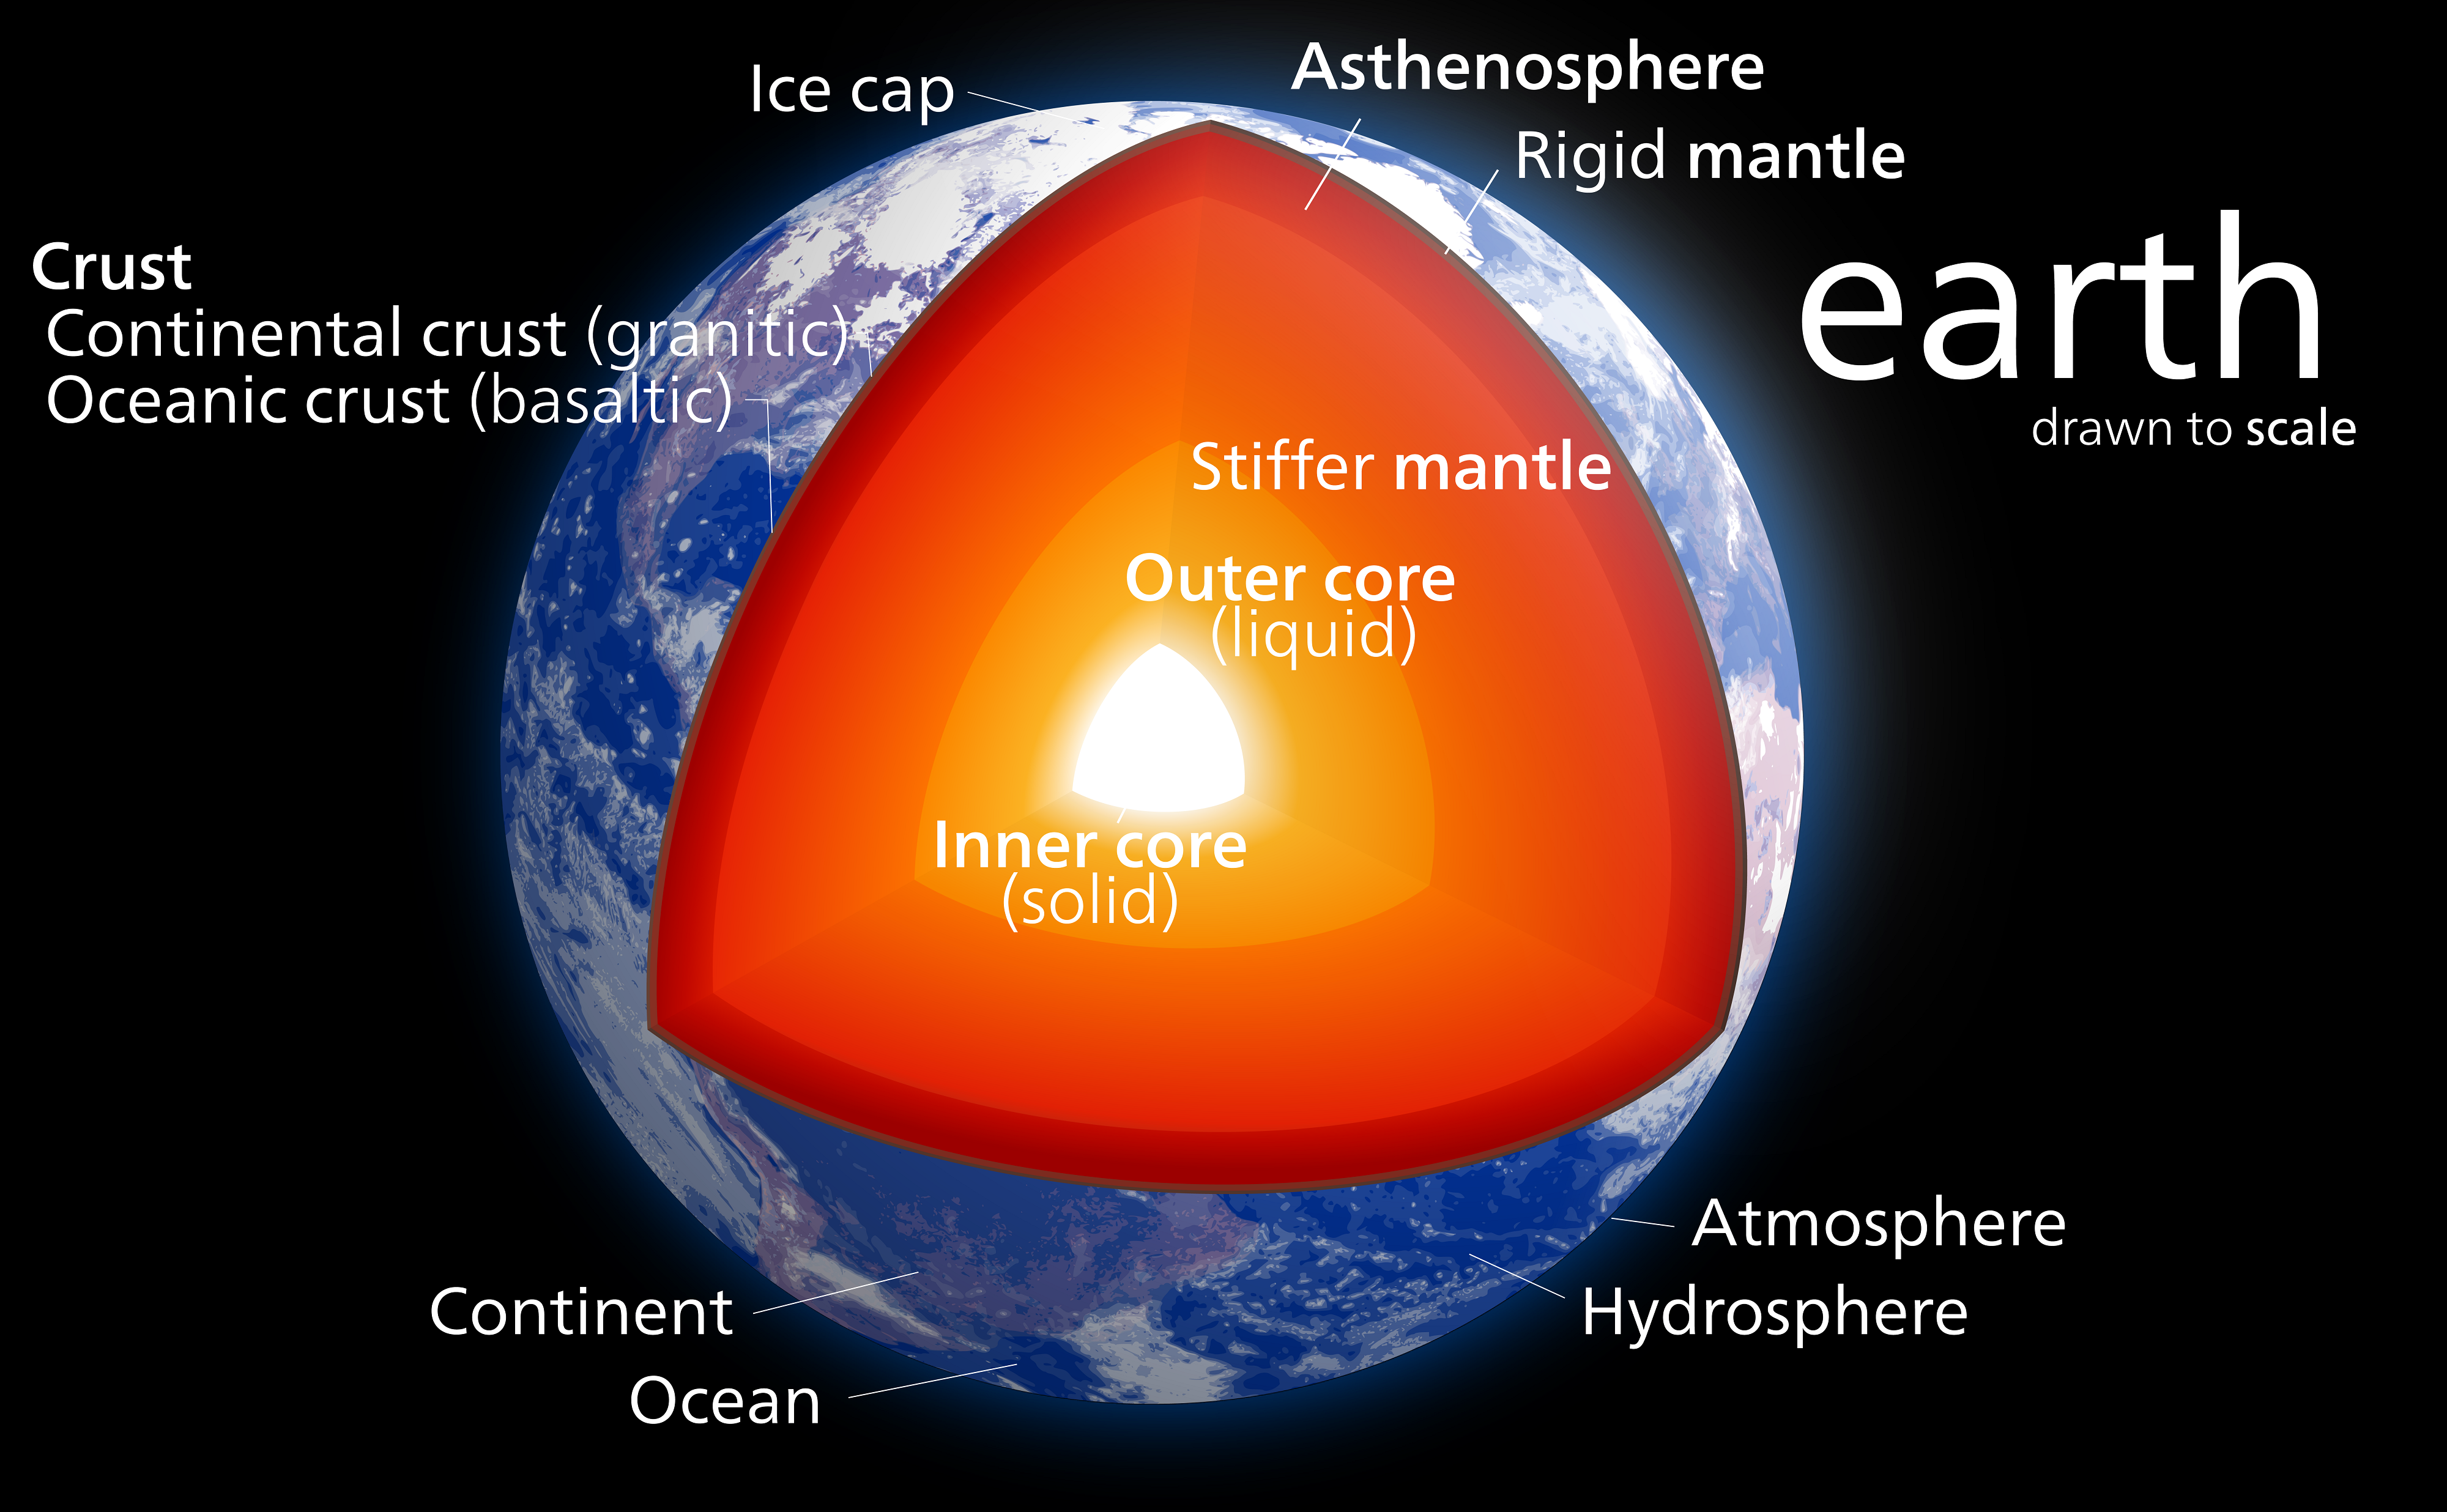 A cutaway diagram of the earth